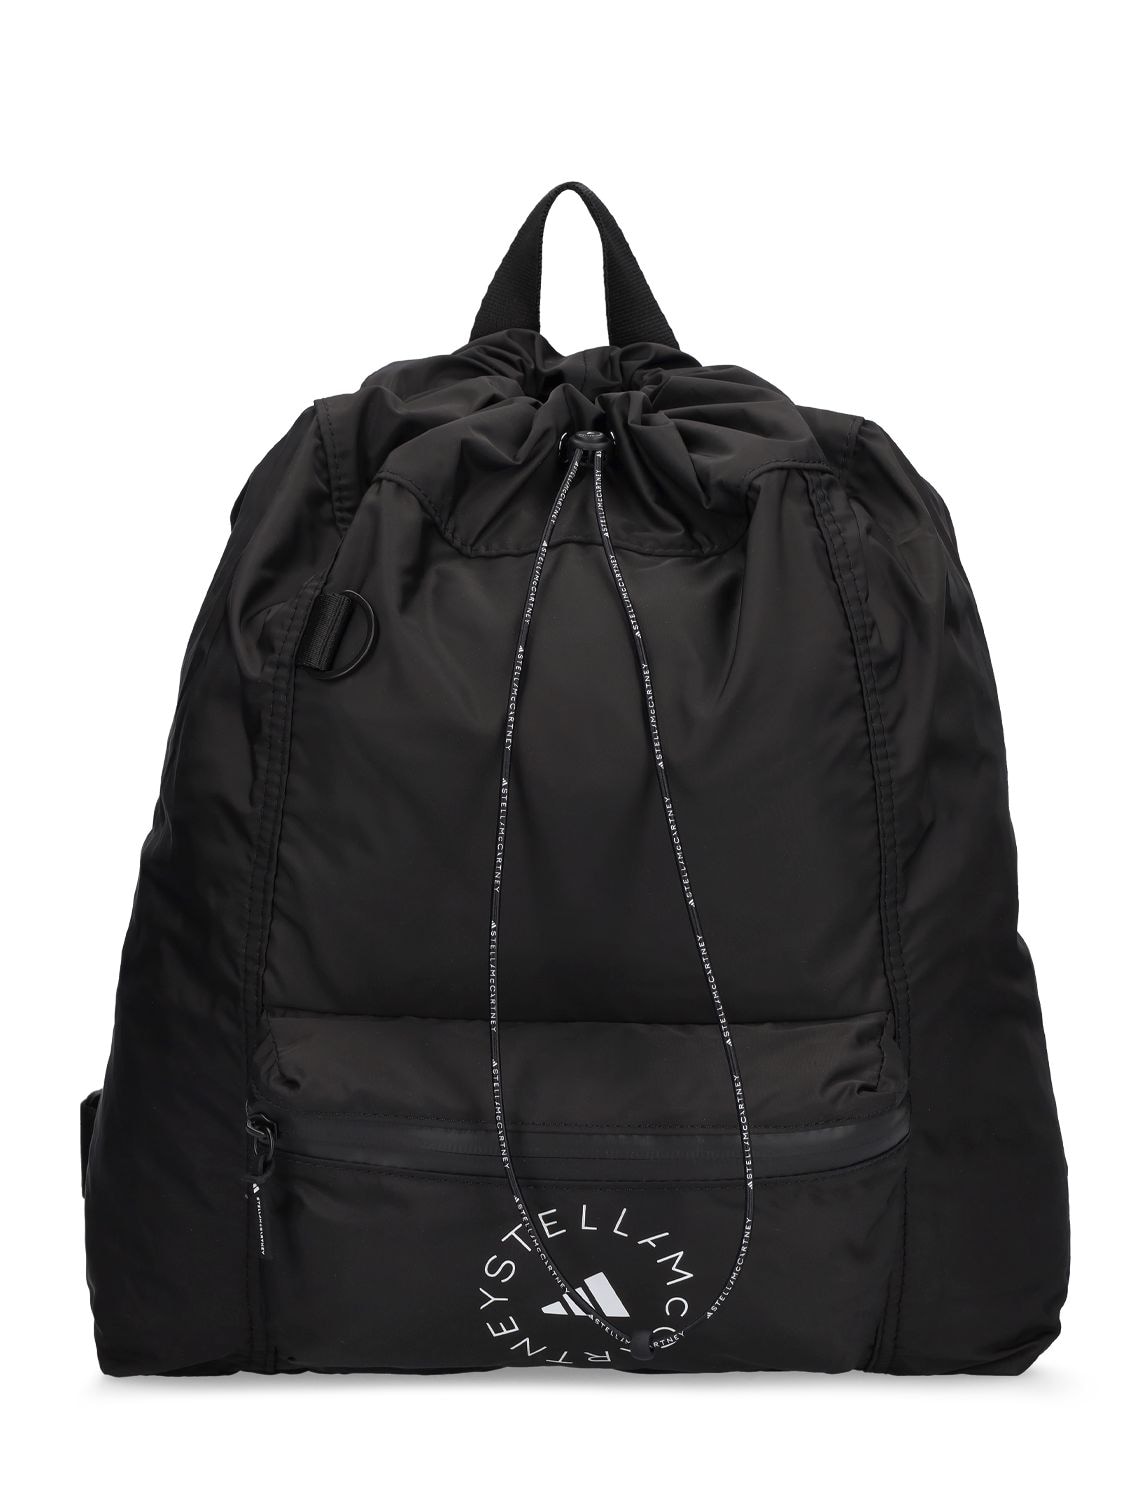 Asmc Gym Sack Backpack